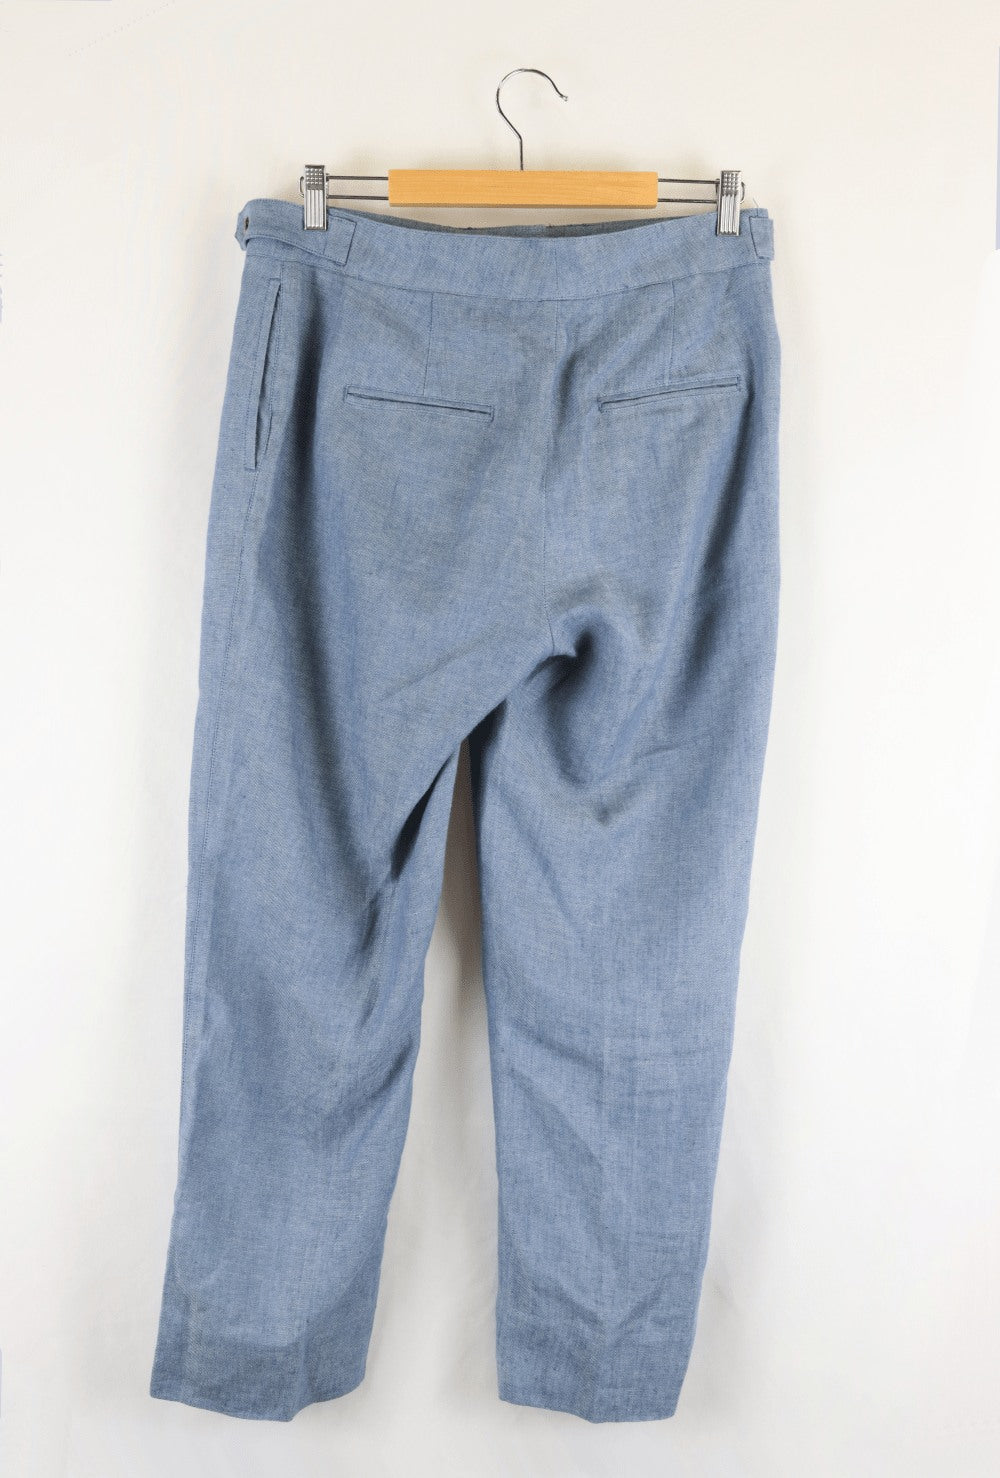 Trenery Blue Pants 10